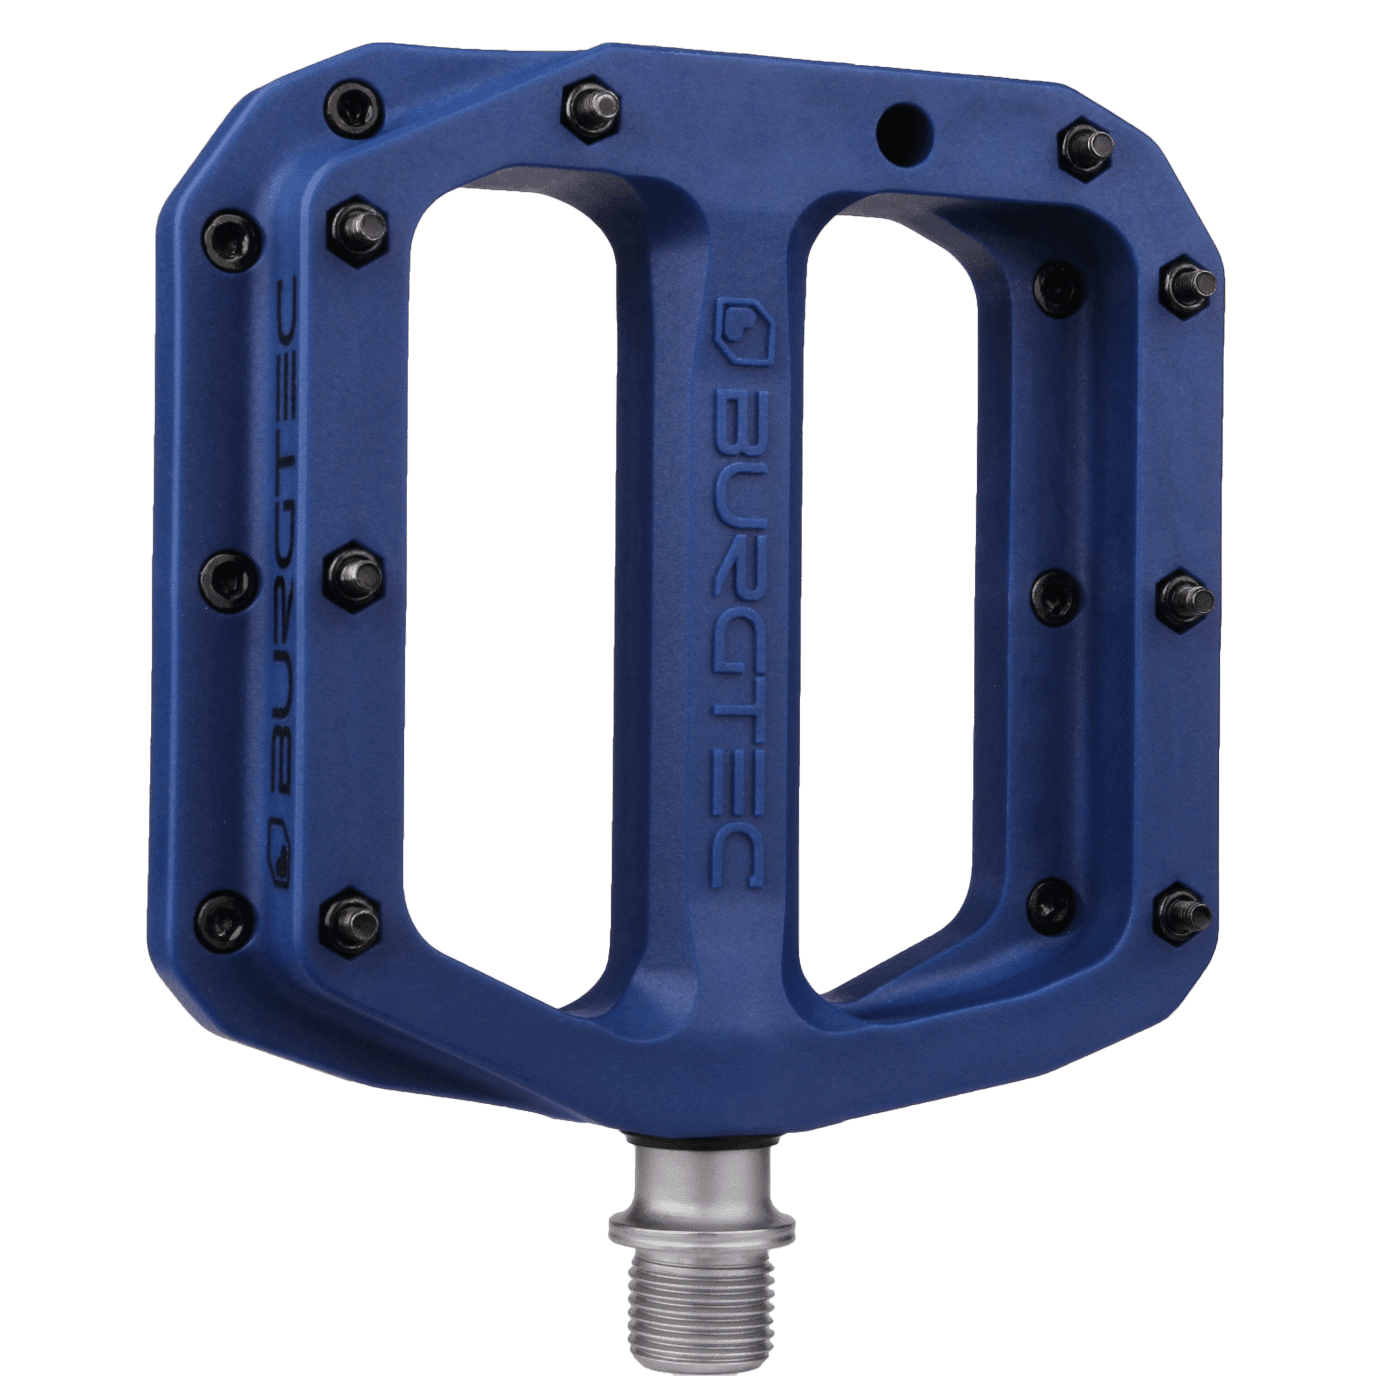 Burgtec composite pedals in deep blue